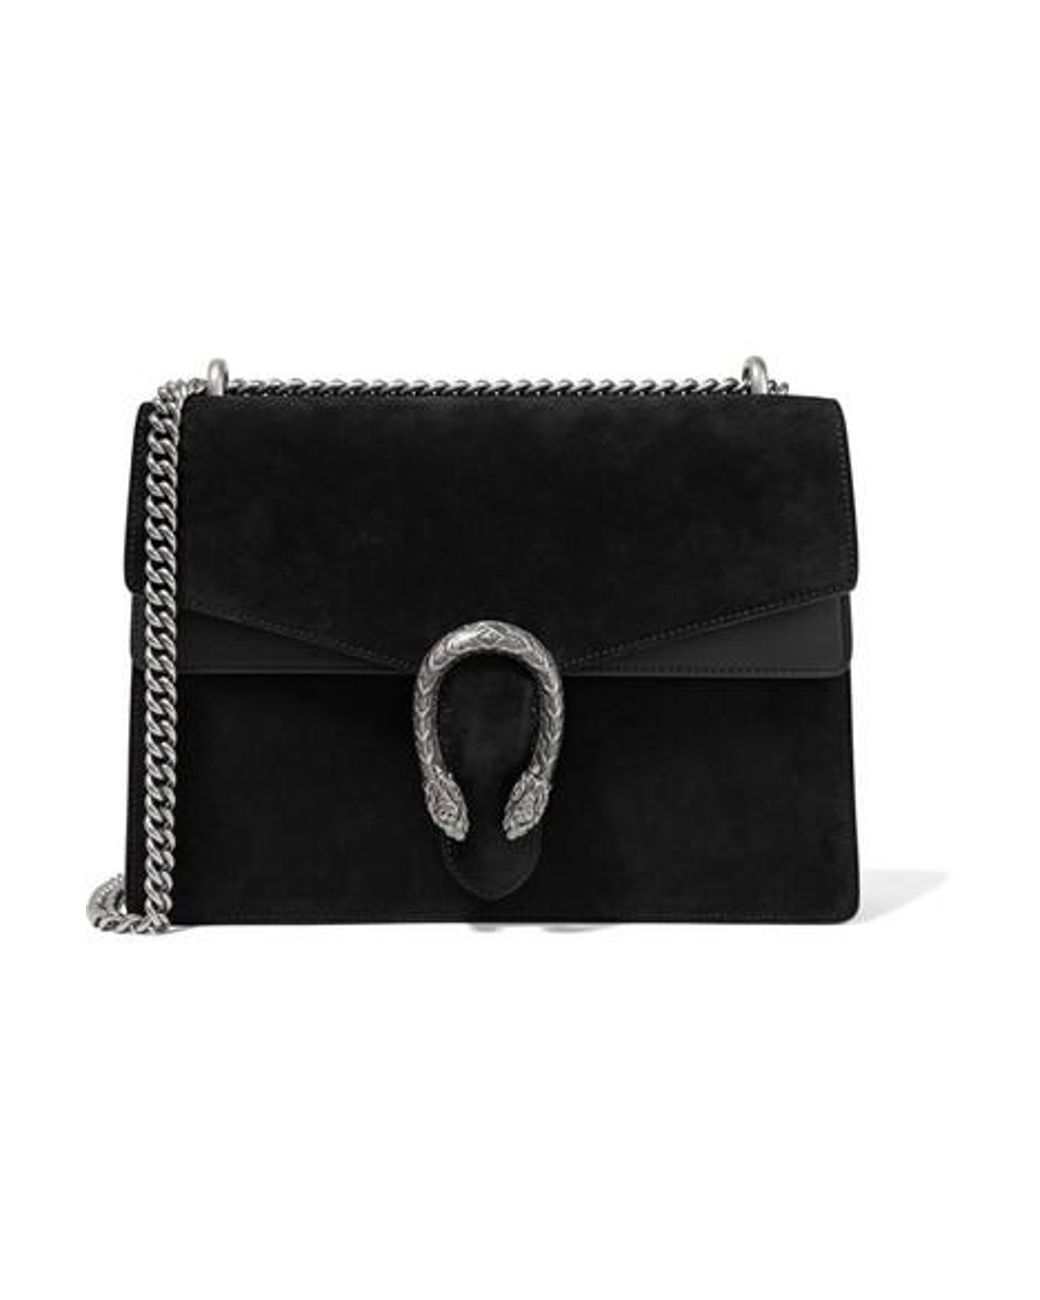 Gucci Dionysus Medium Suede Shoulder Bag in Black | Lyst